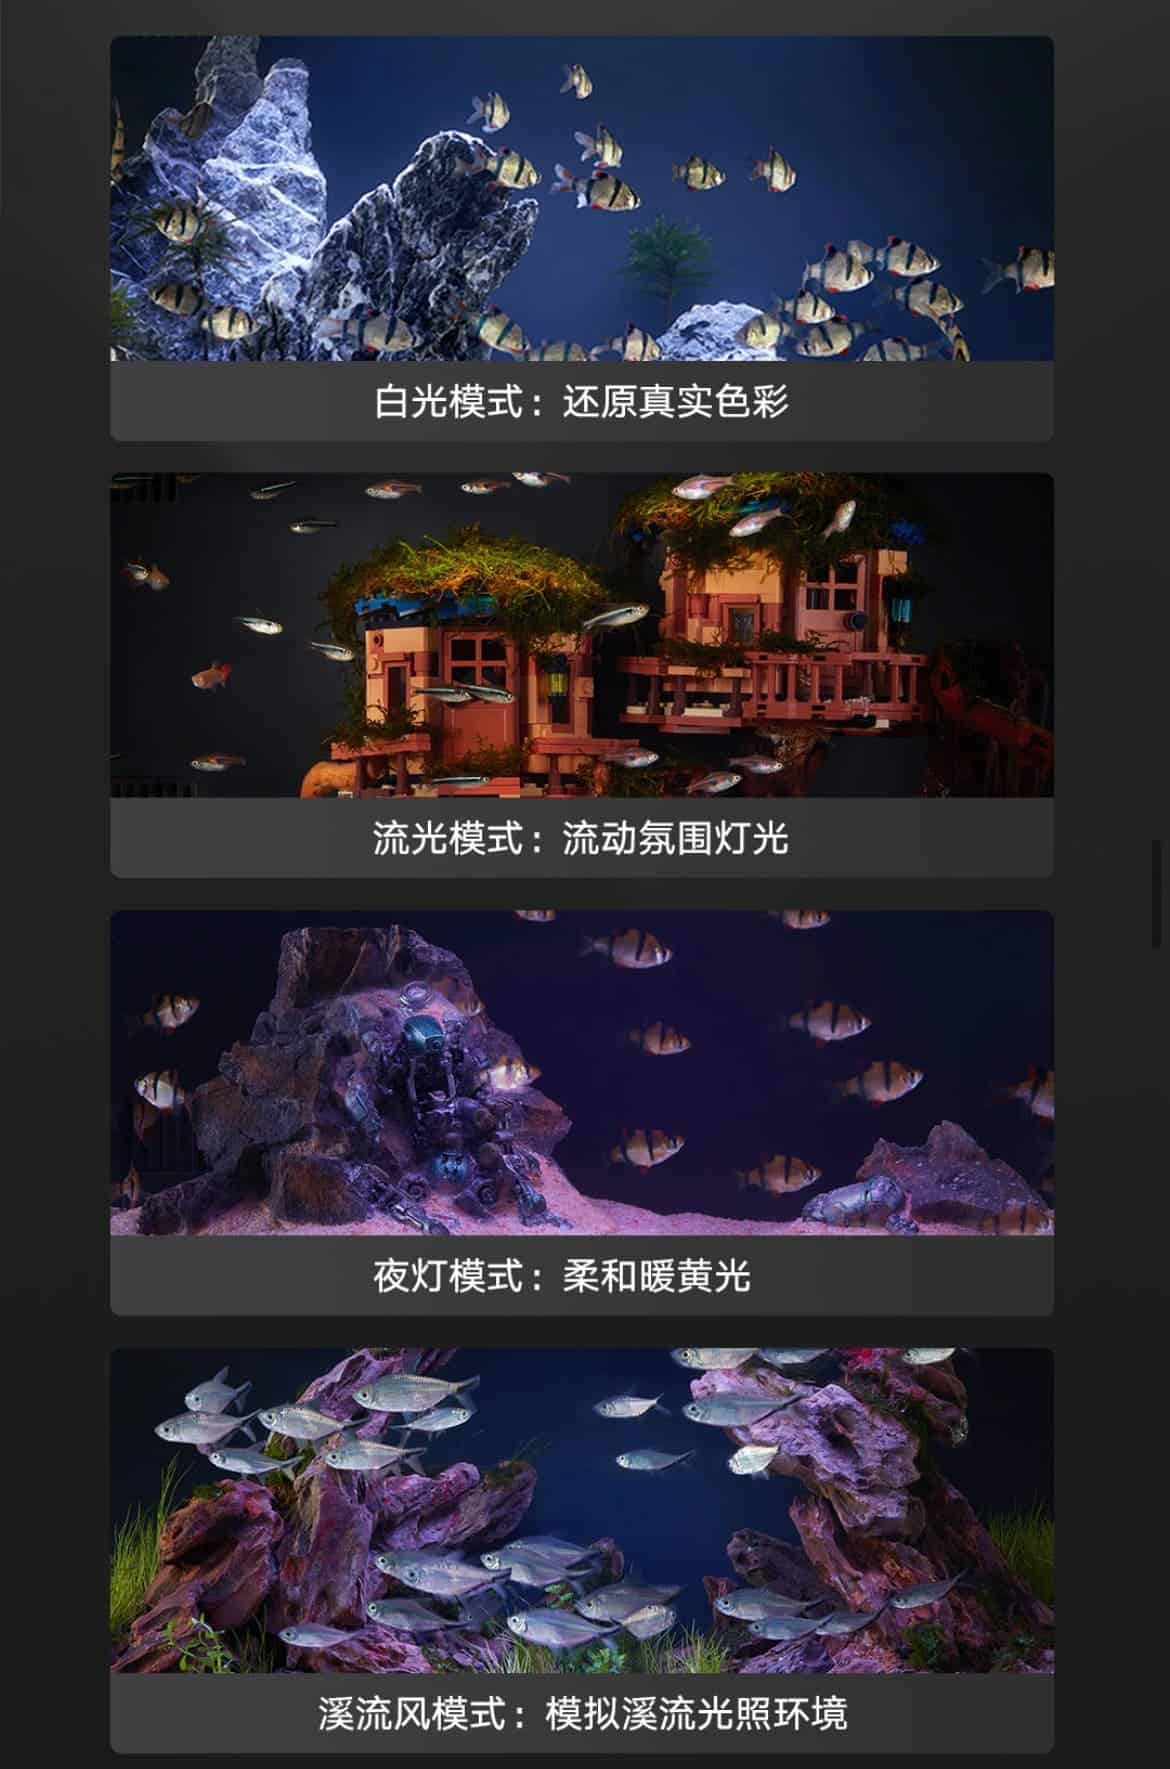 Xiaomi Mijia Smart Aquarium